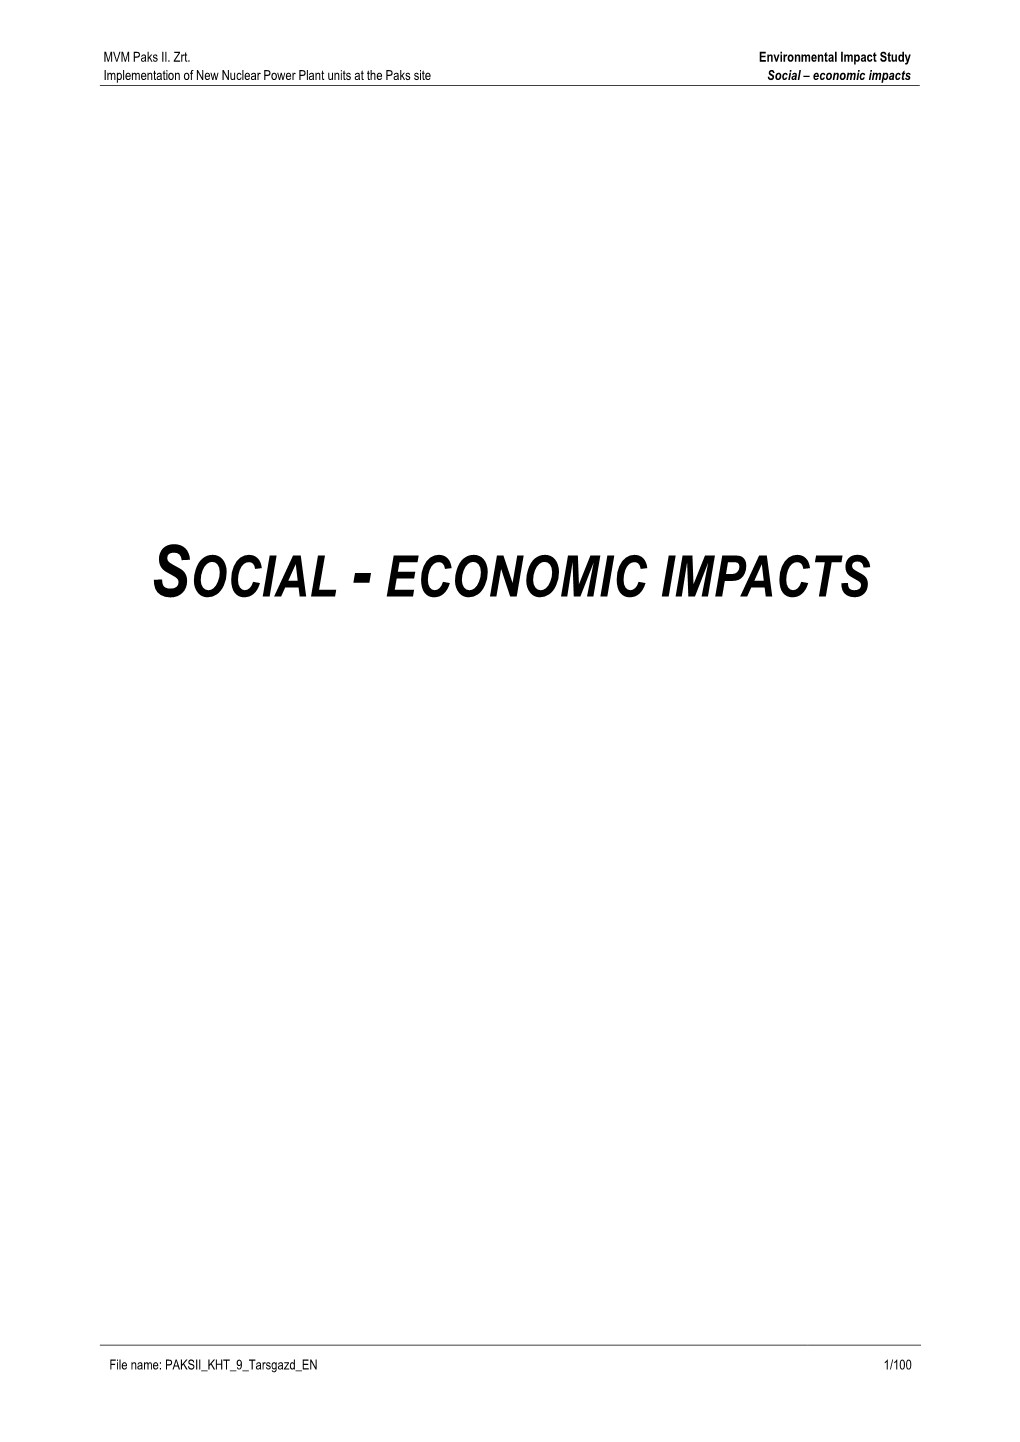 Social – Economic Impacts